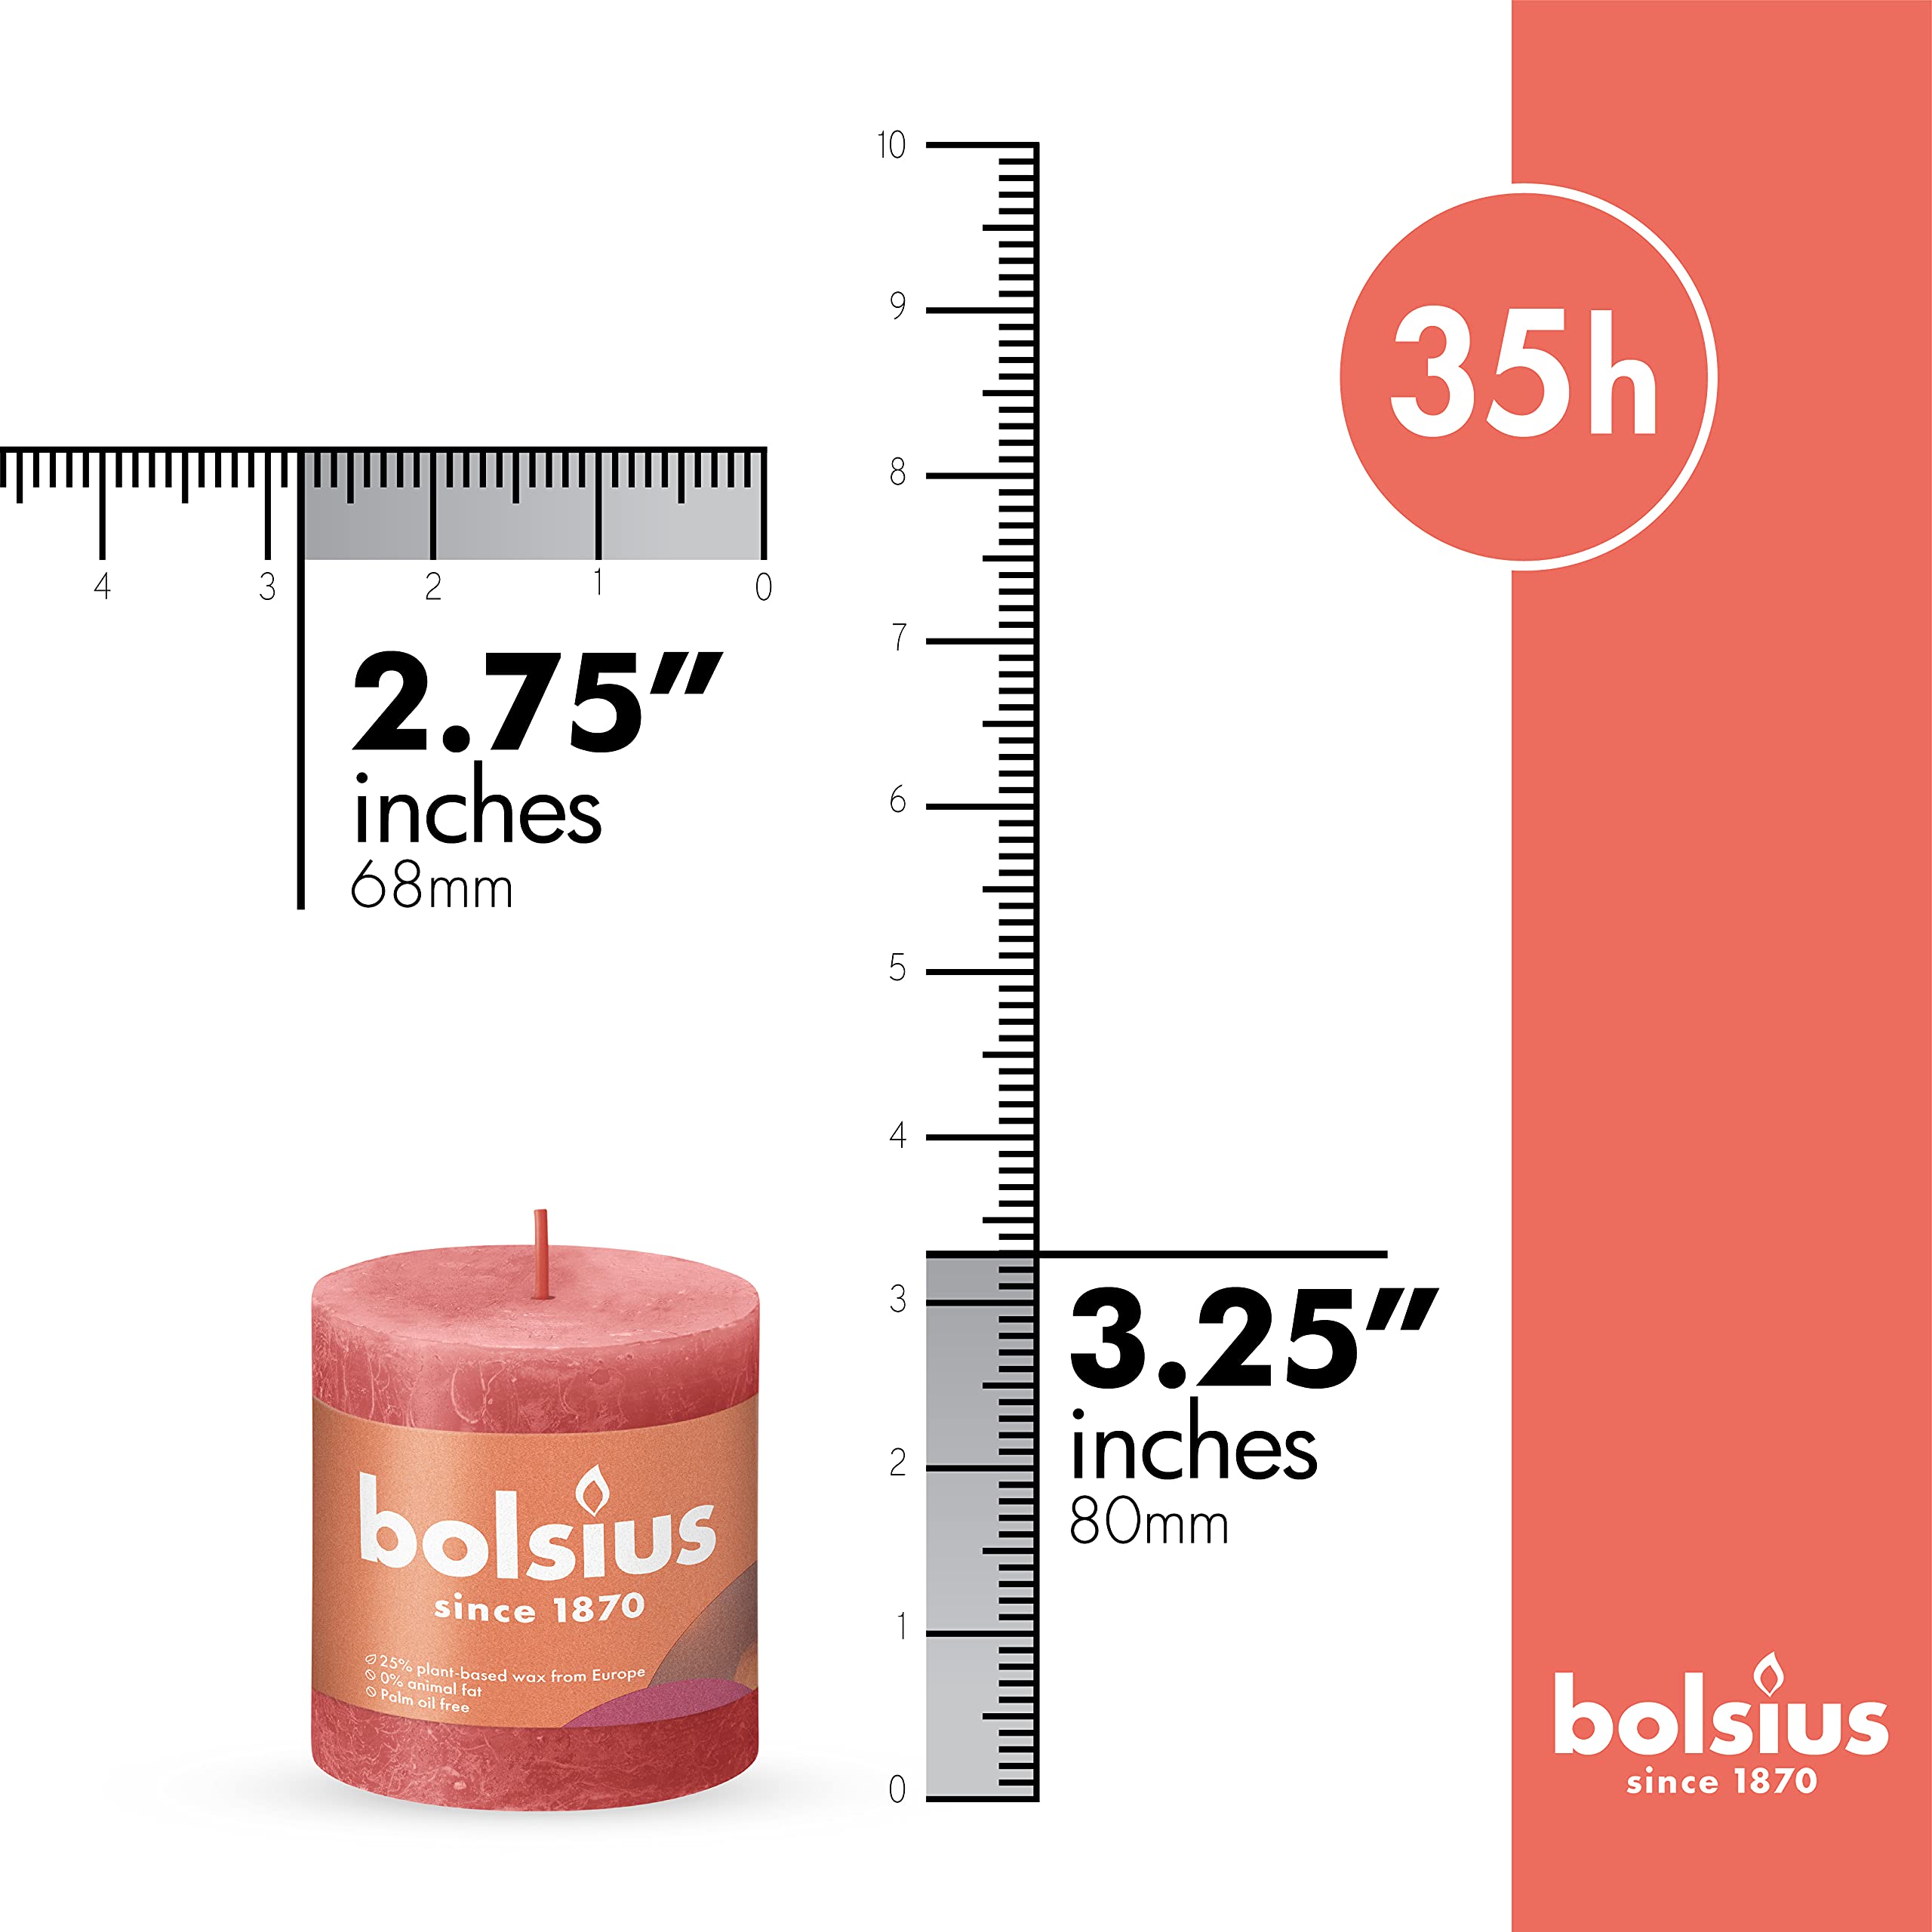 BOLSIUS Pillar Candles - Premium European Quality - Natural Eco-Friendly Plant-Based Wax - Unscented Dripless Smokeless  - Good